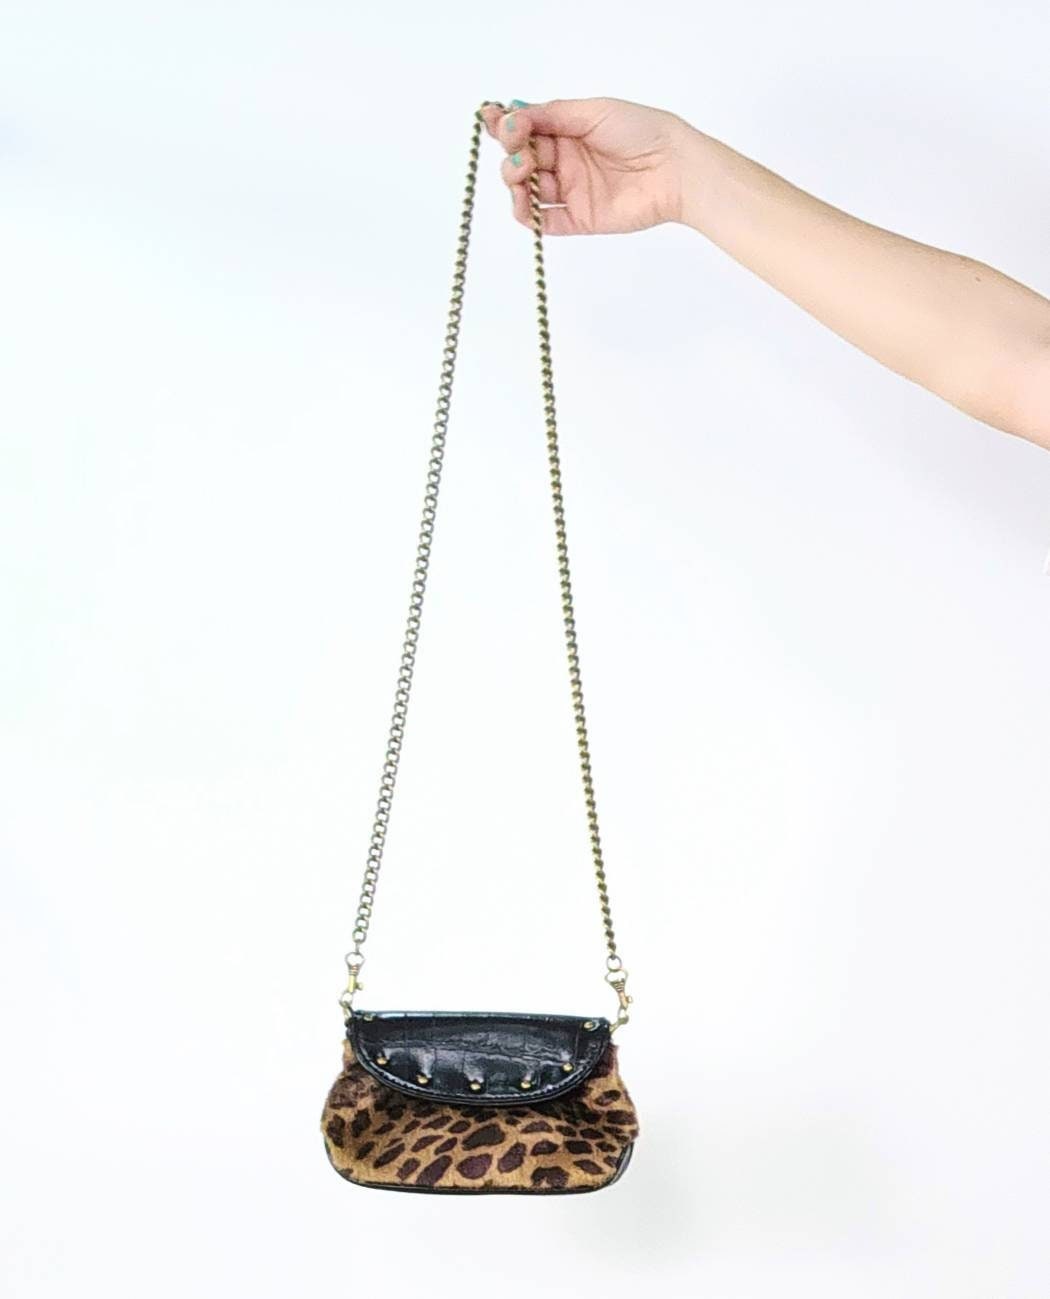 Unzipped Cheetah Prints by New Vintage Handbags